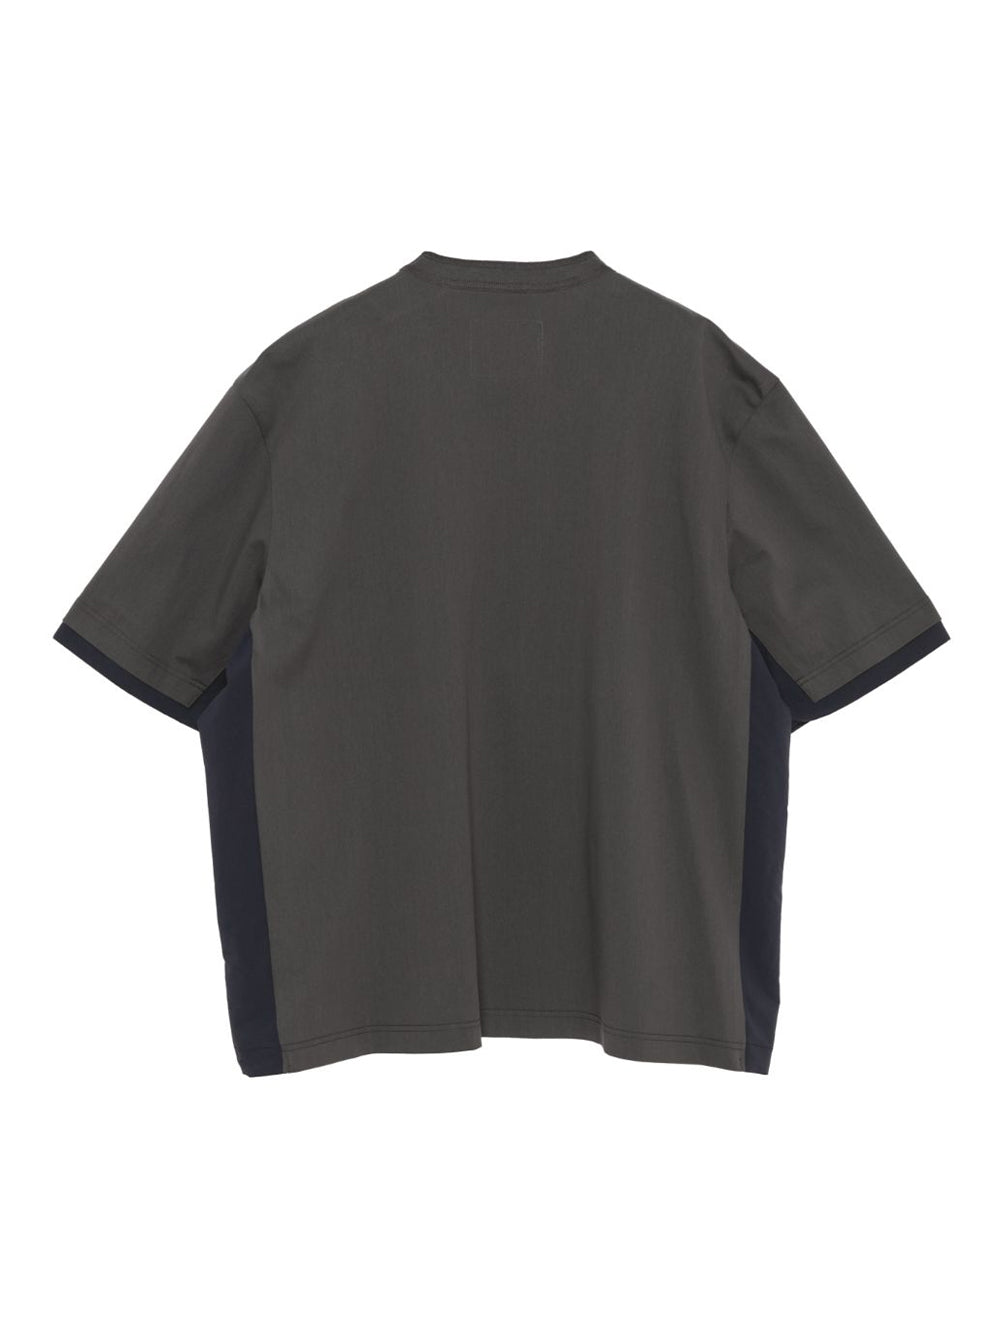 Cotton Jersey T-Shirt C/Gray×Navy